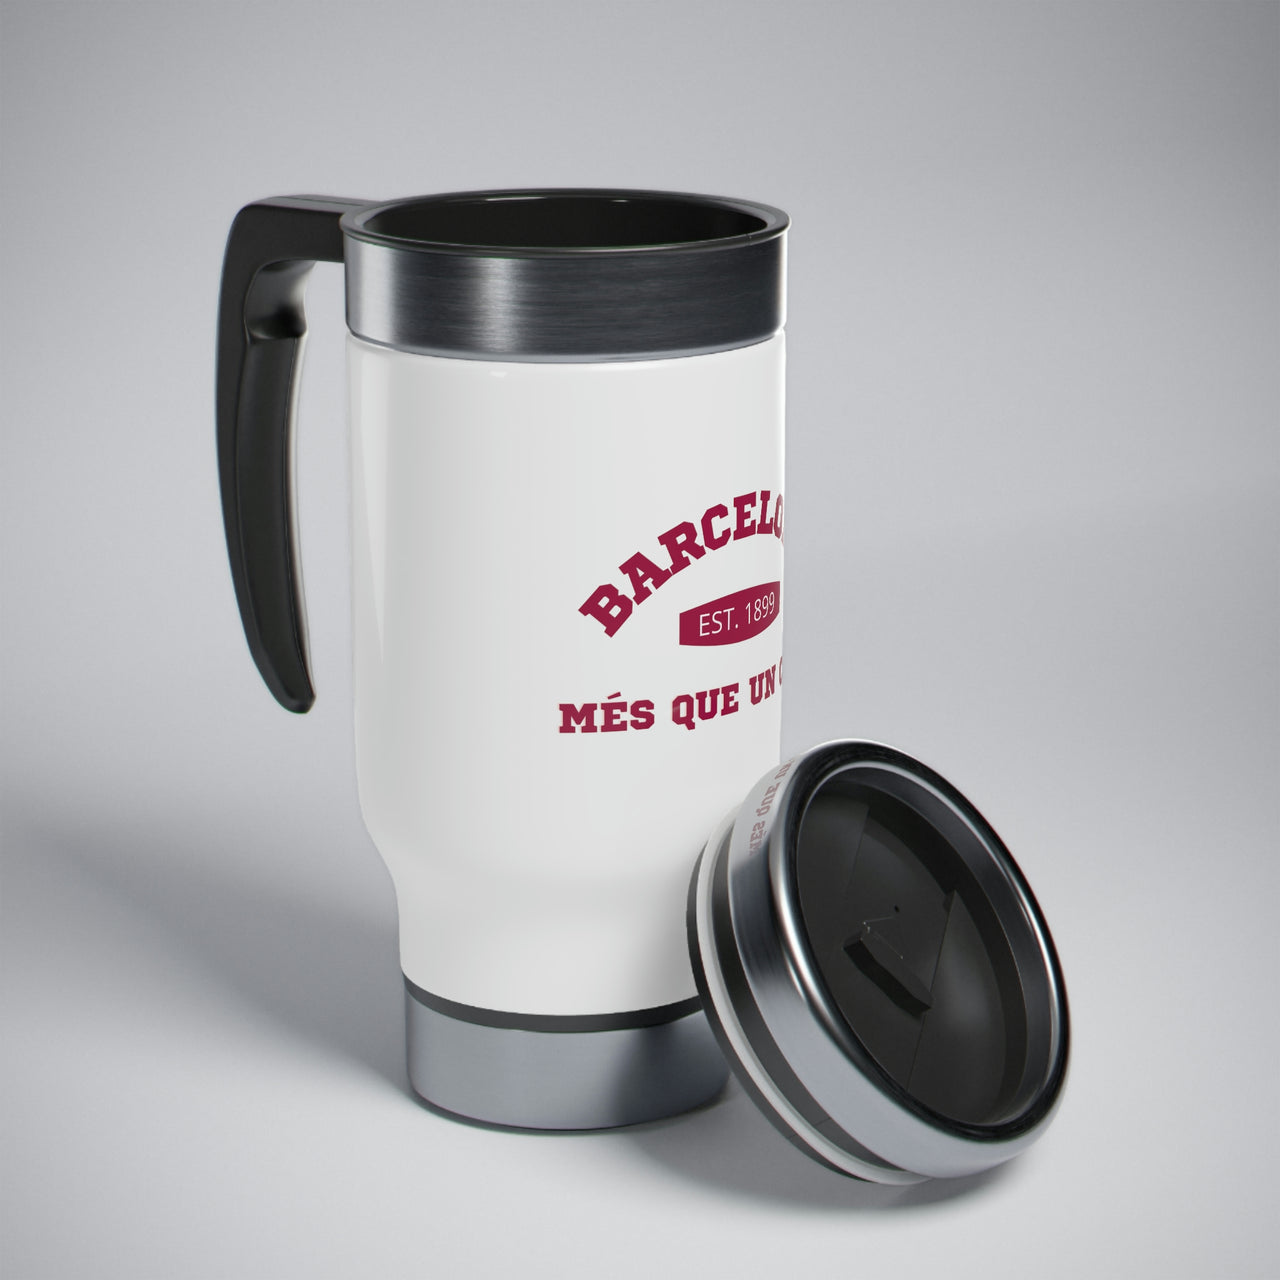 Barcelona Stainless Steel Travel Mug with Handle, 14oz